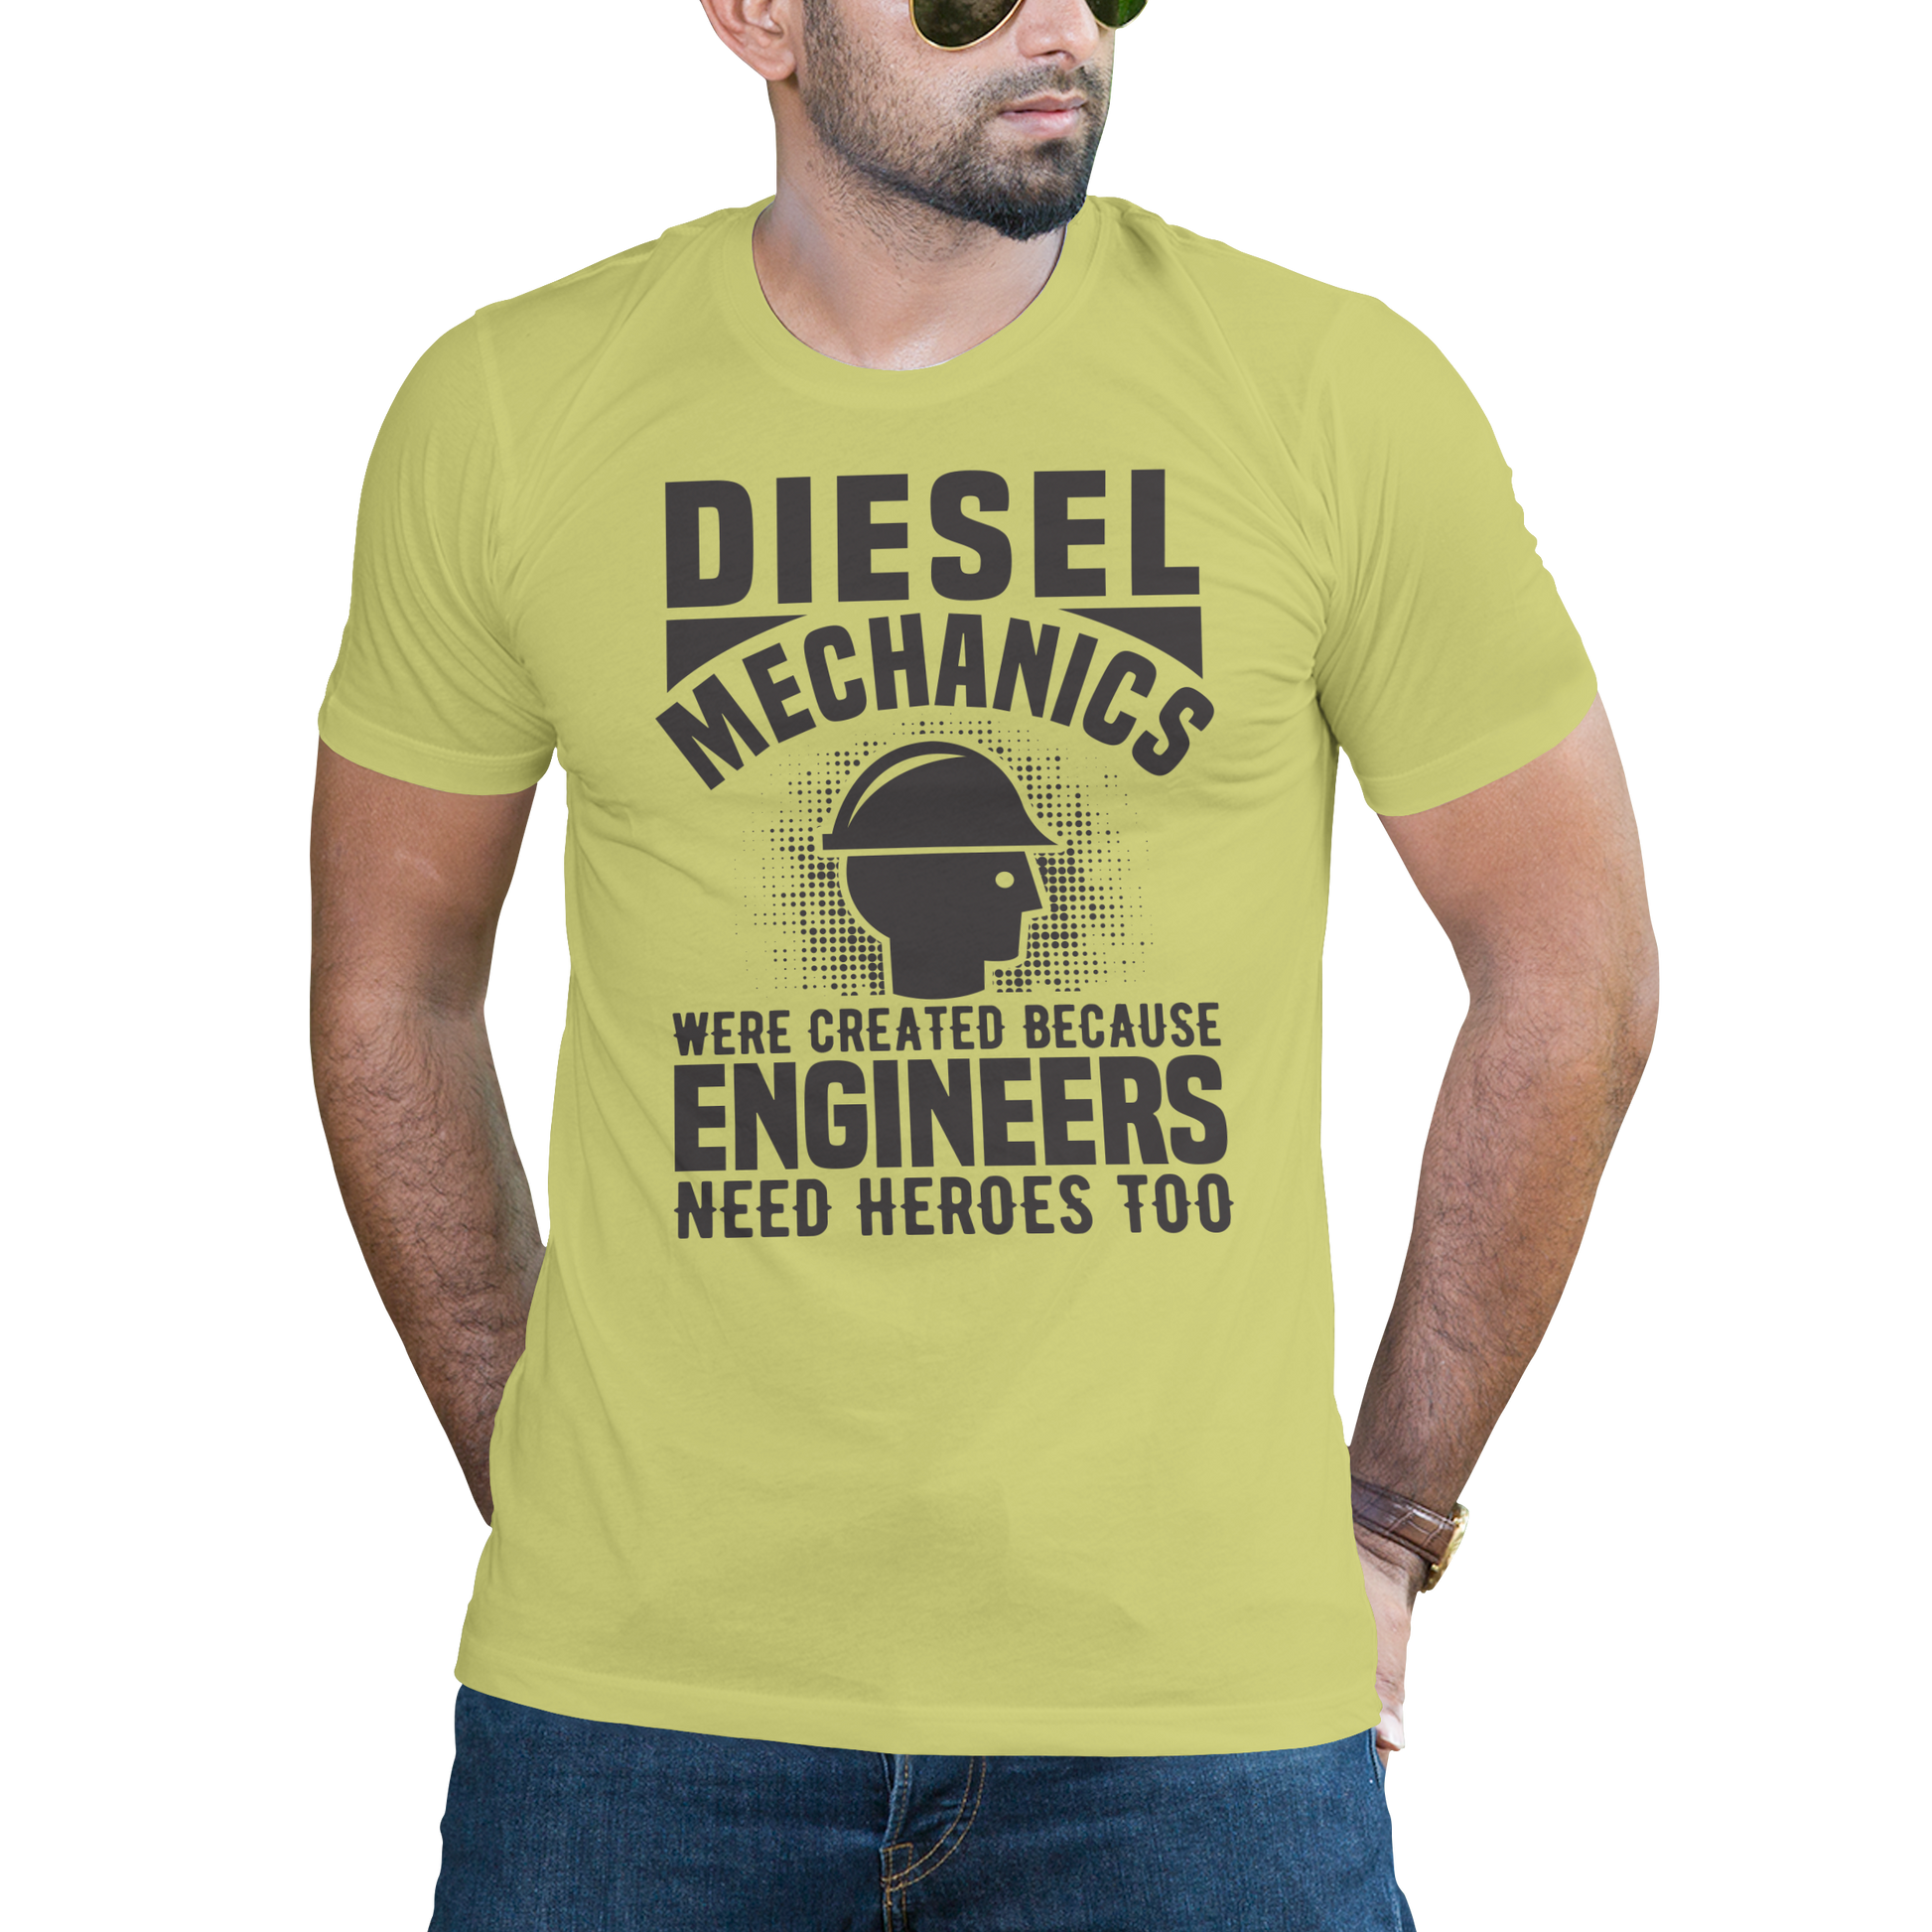 Diesel mechanics mens womens unisex t-shirt - Premium t-shirt from MyDesigns - Just $16.95! Shop now at Lees Krazy Teez